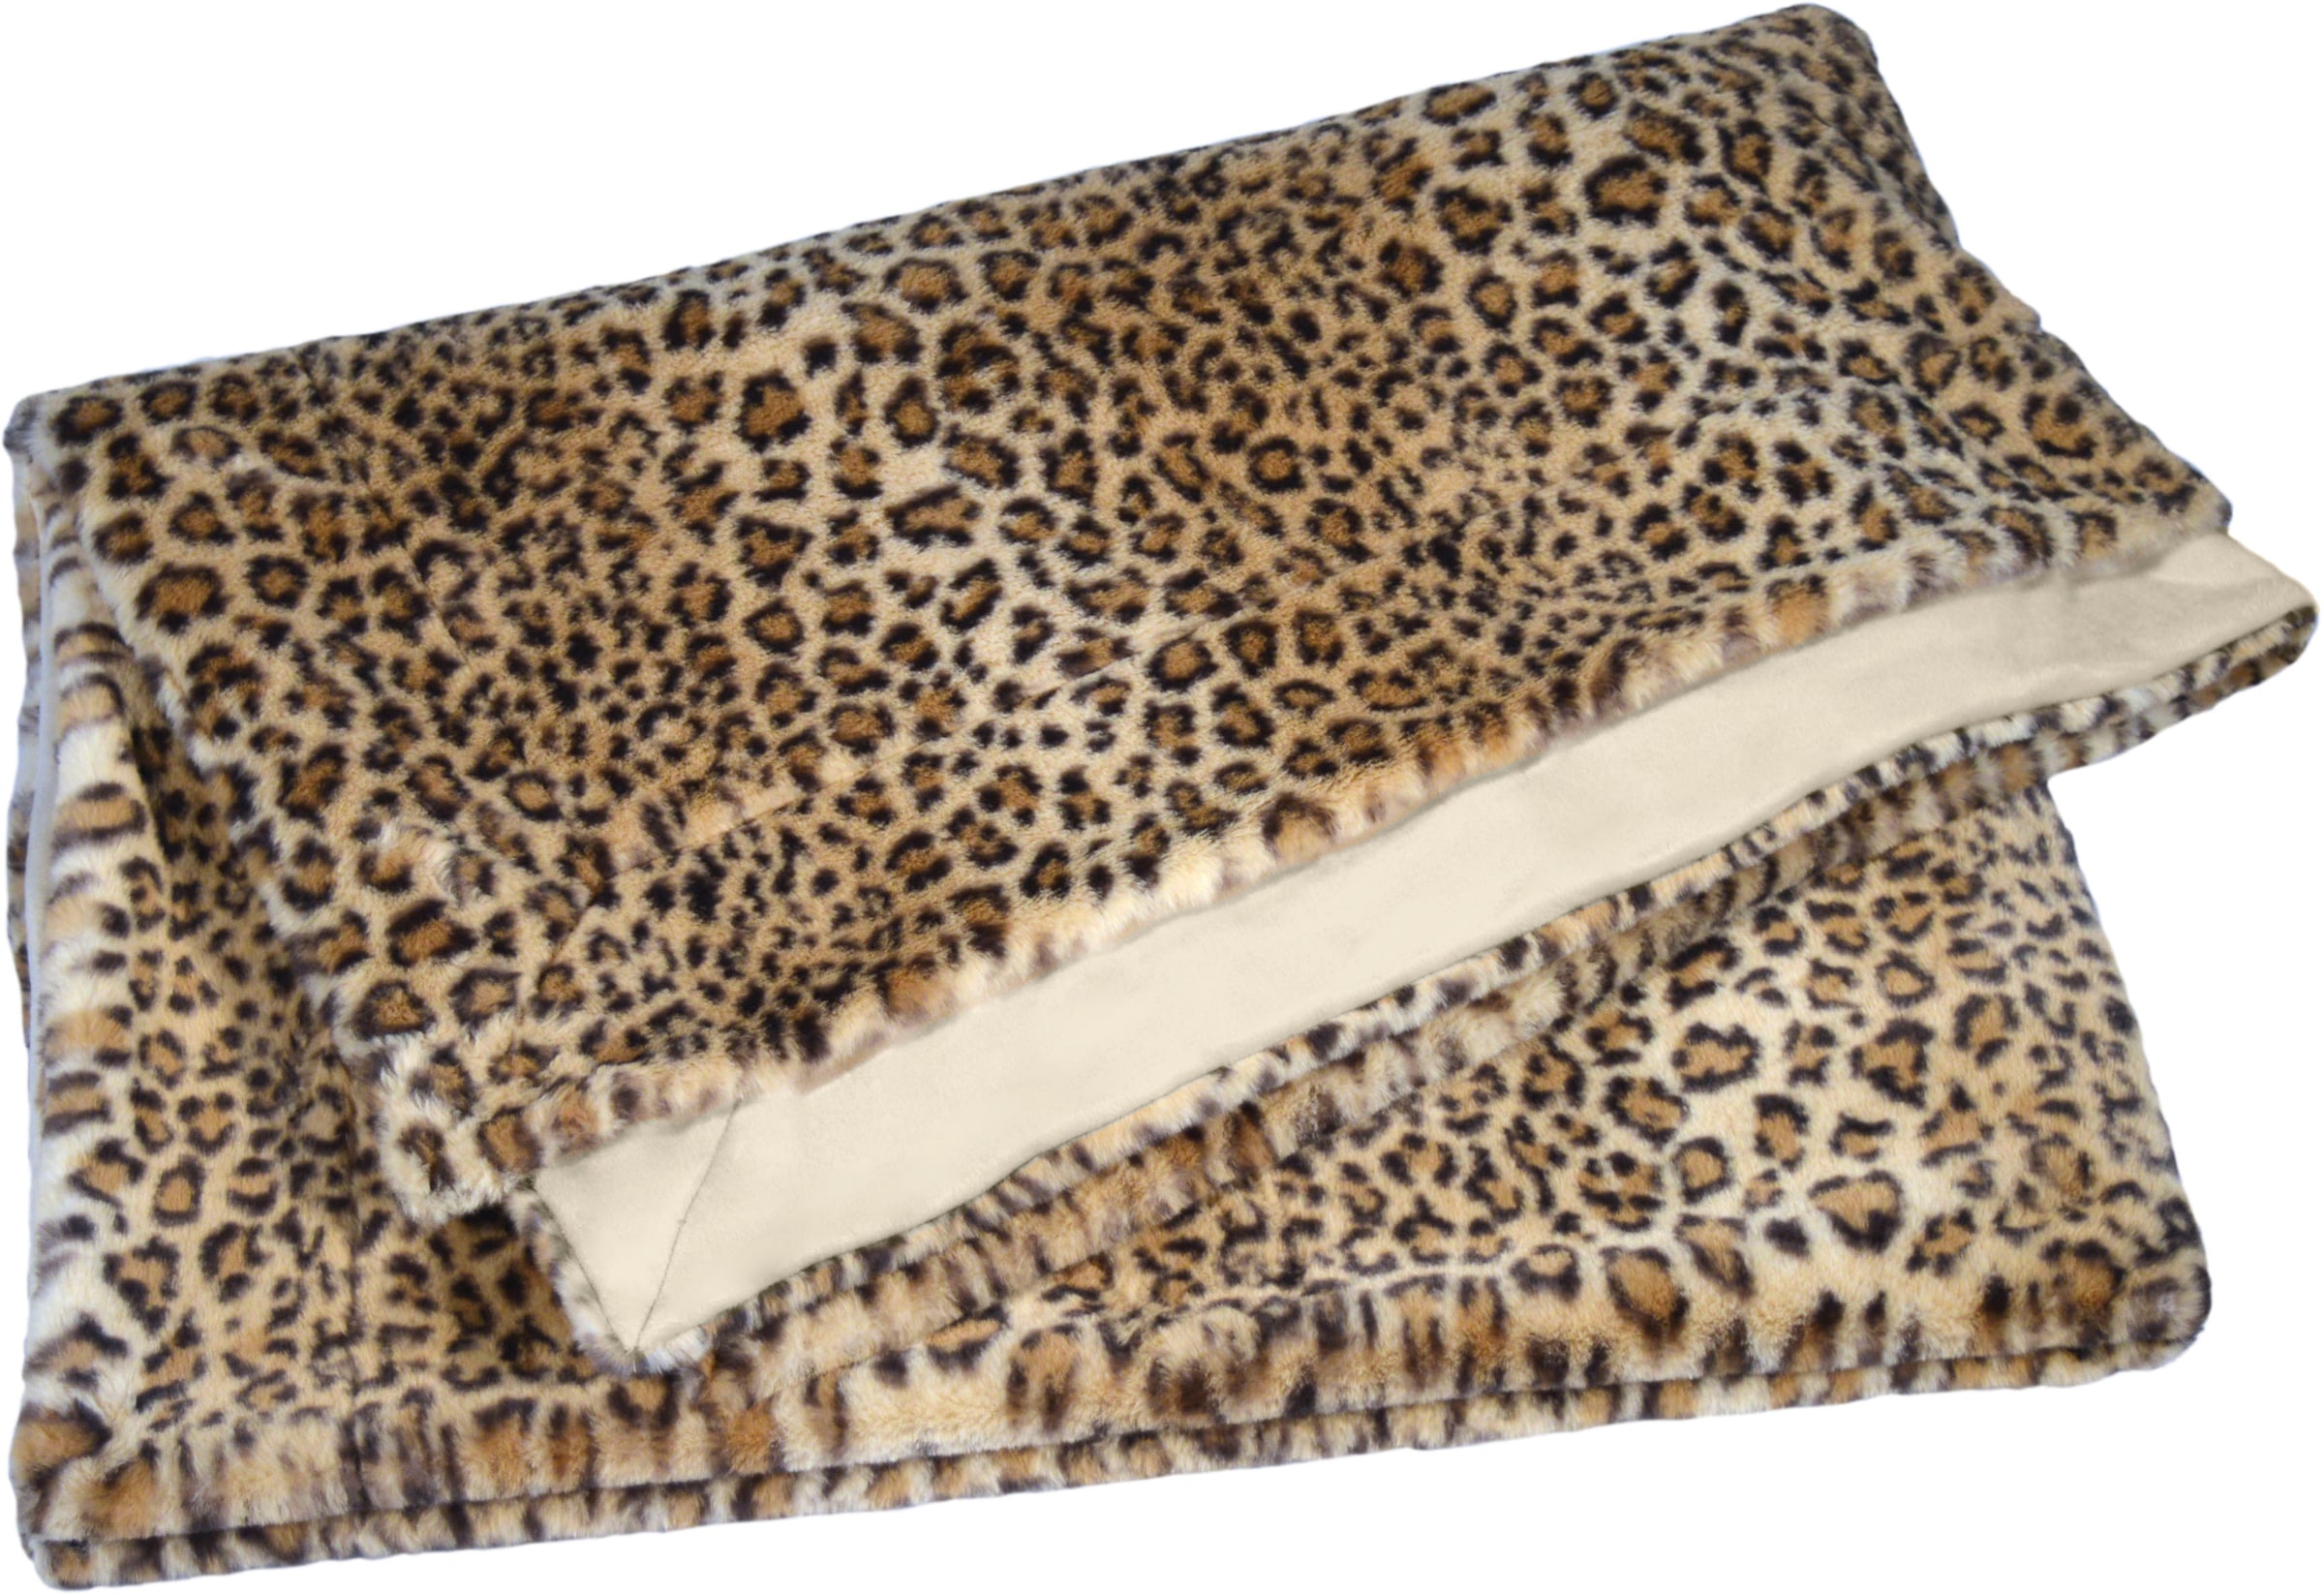 MESANA Wohndecke hochwertigem Fellimitat »Leopard«, aus